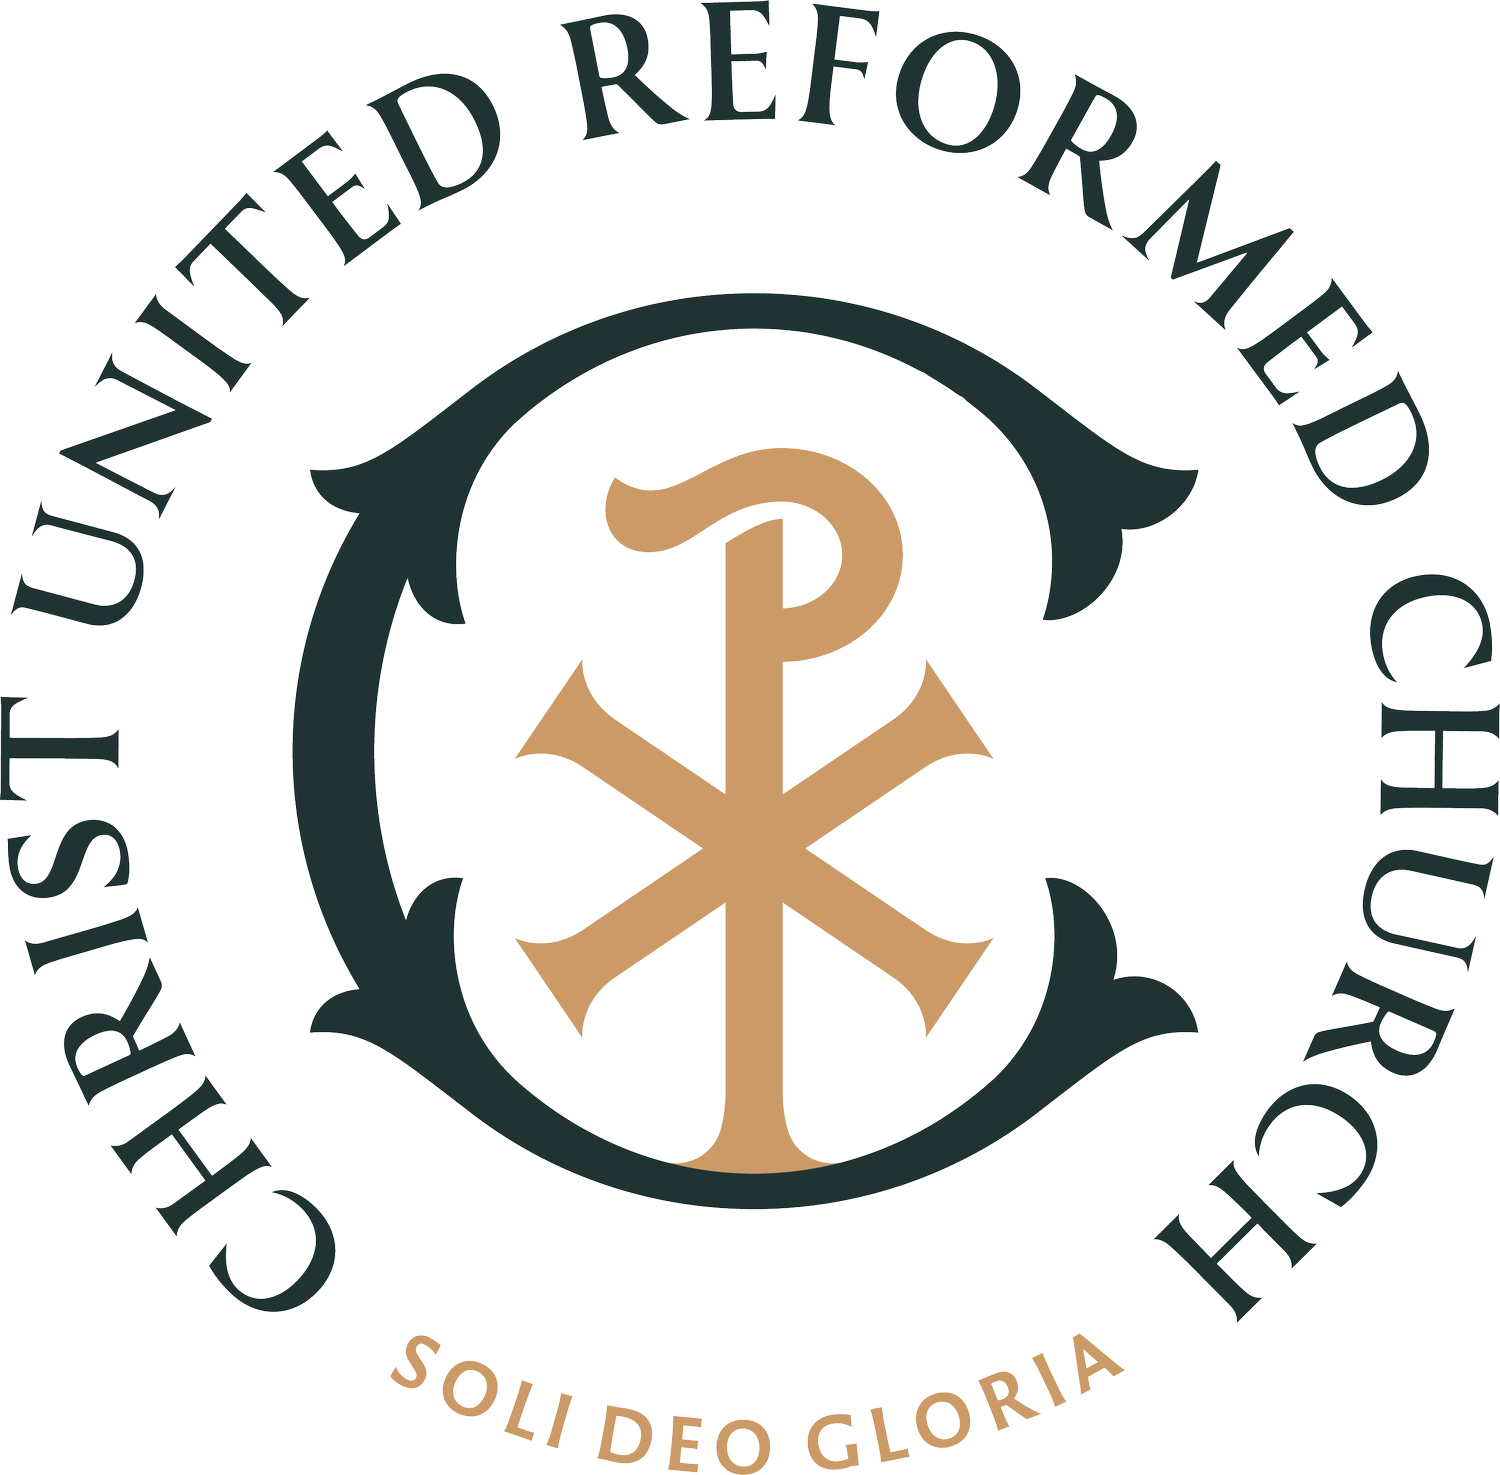 www.christurc.org